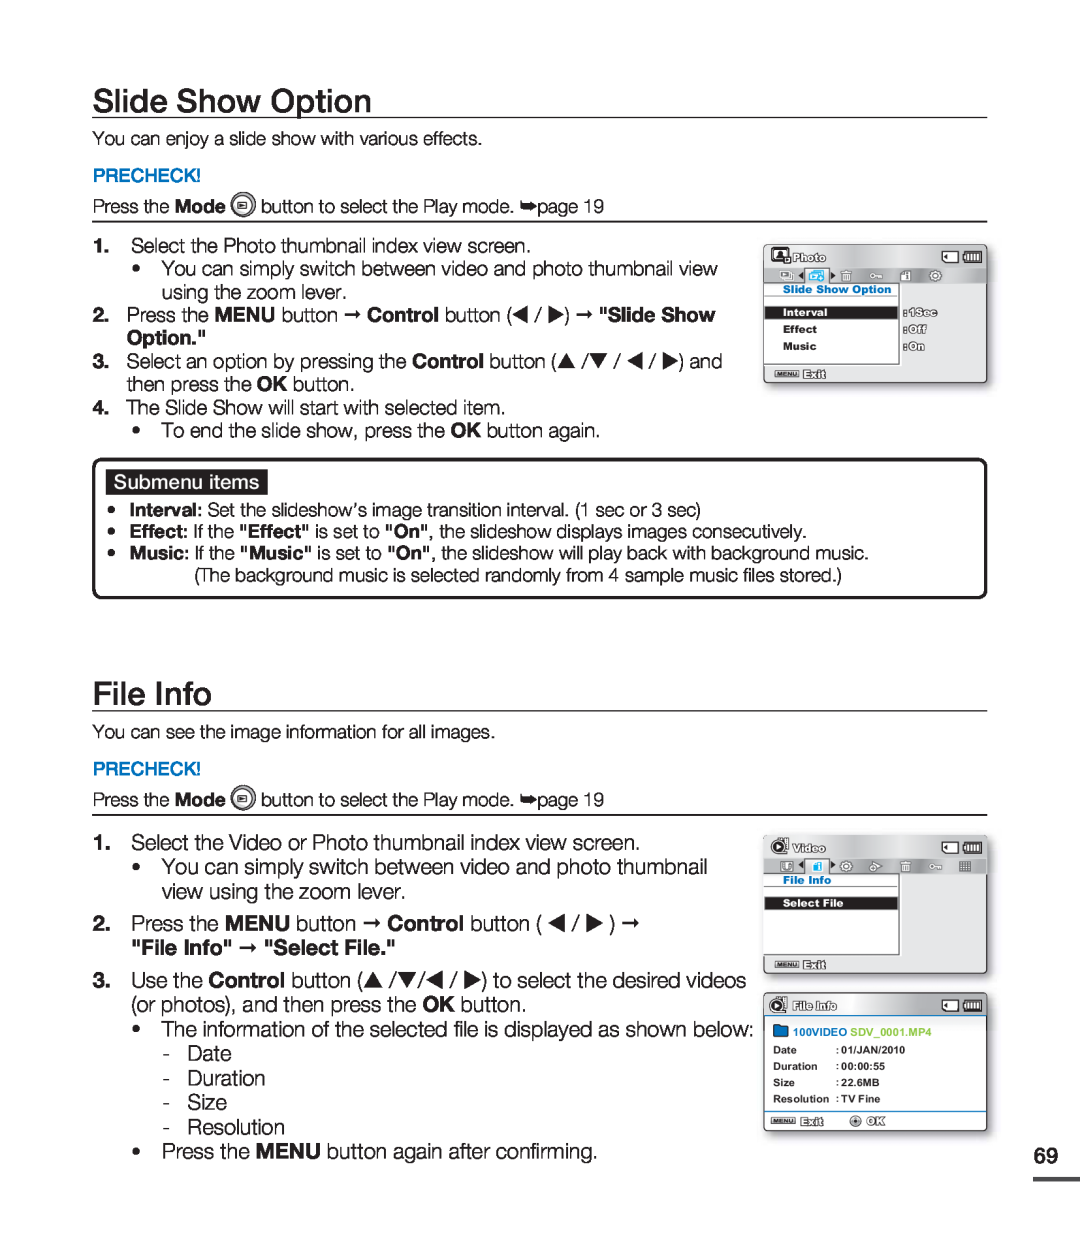 Samsung SMX-C200LP/EDC Slide Show Option, File Info, Date Duration Size Resolution, Submenu items, Precheck, Effect, Music 